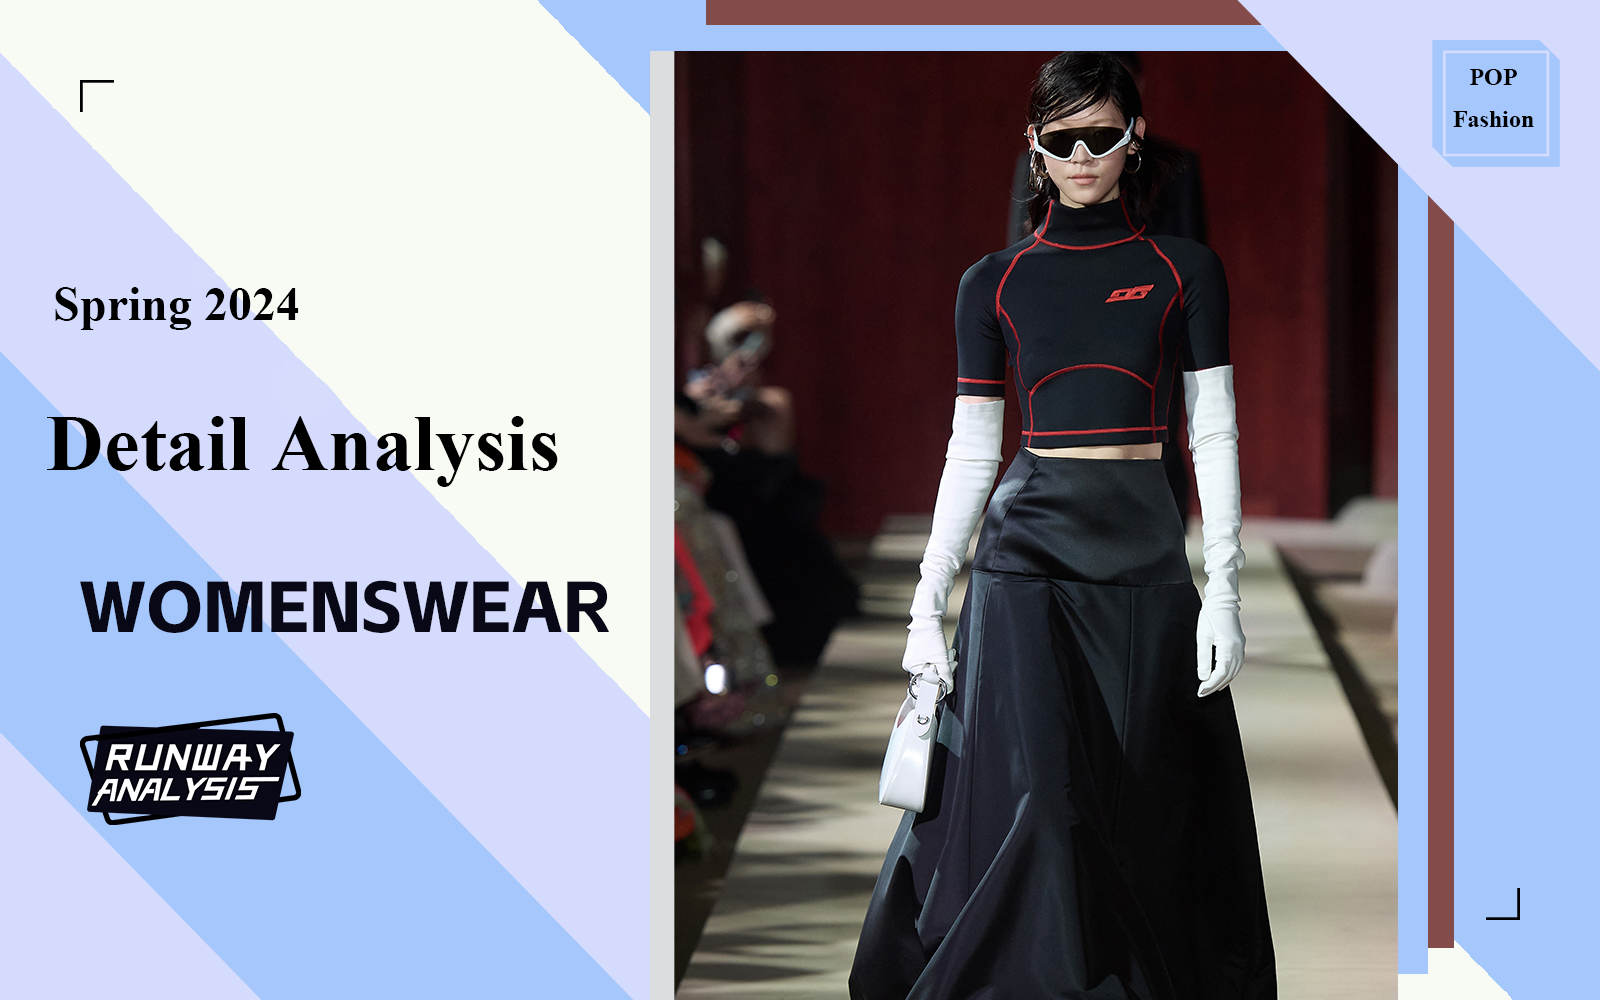 Details -- Spring 2024 Comprehensive Runway Analysis of Womenswear